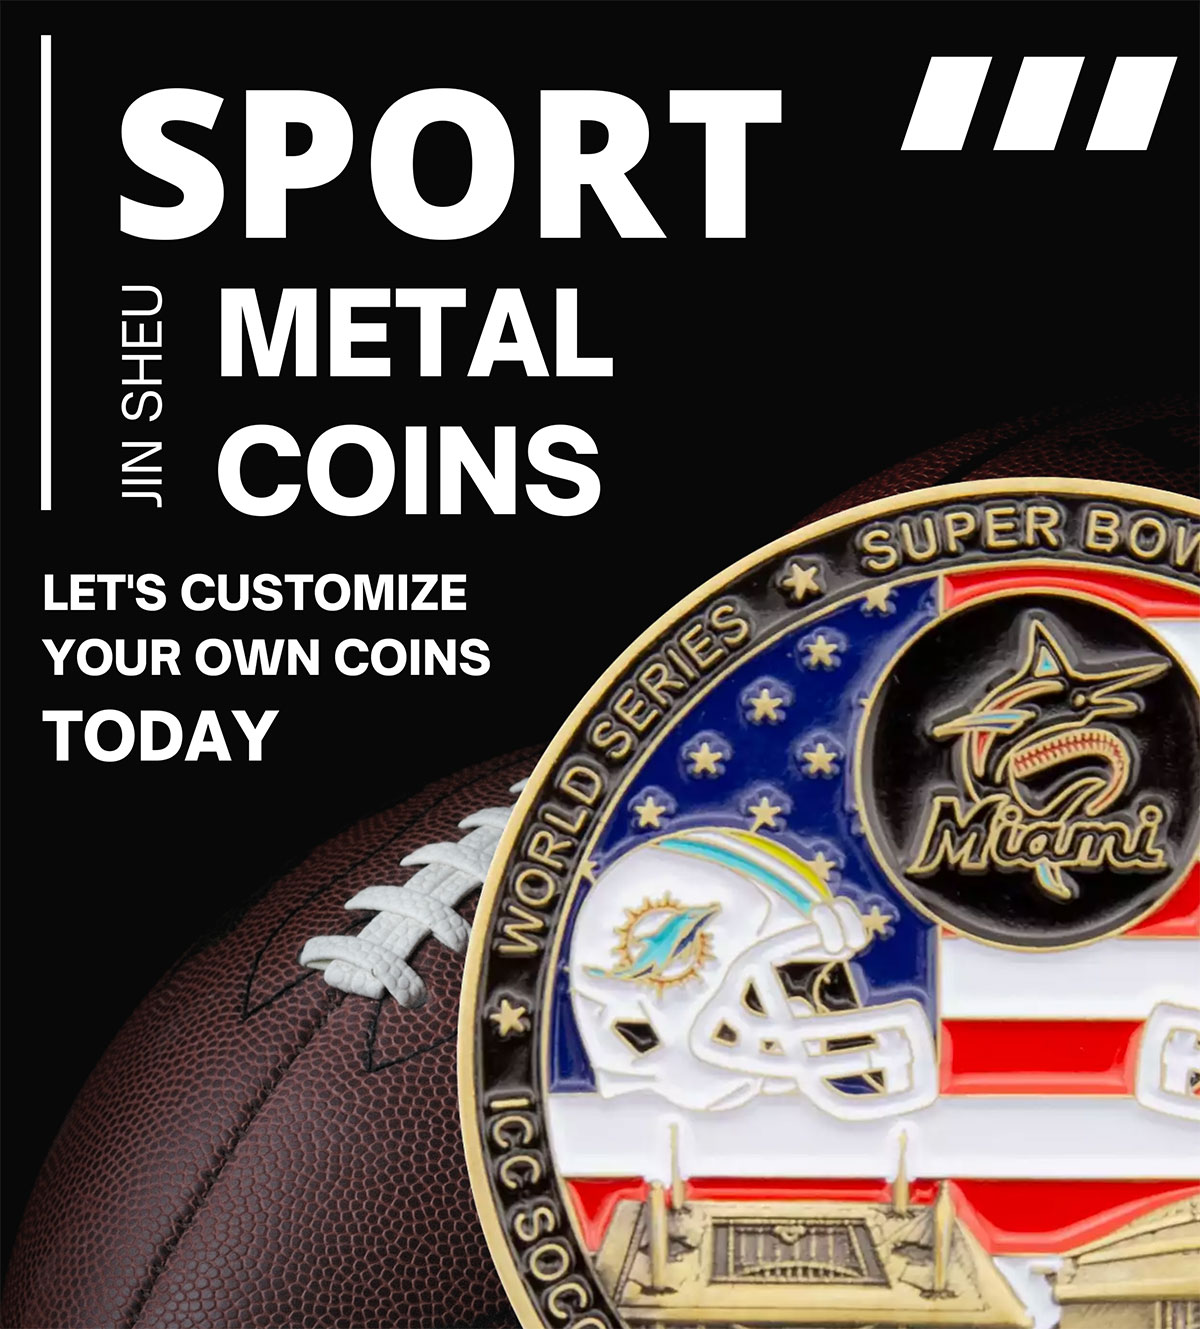 sport-coin-detail-1